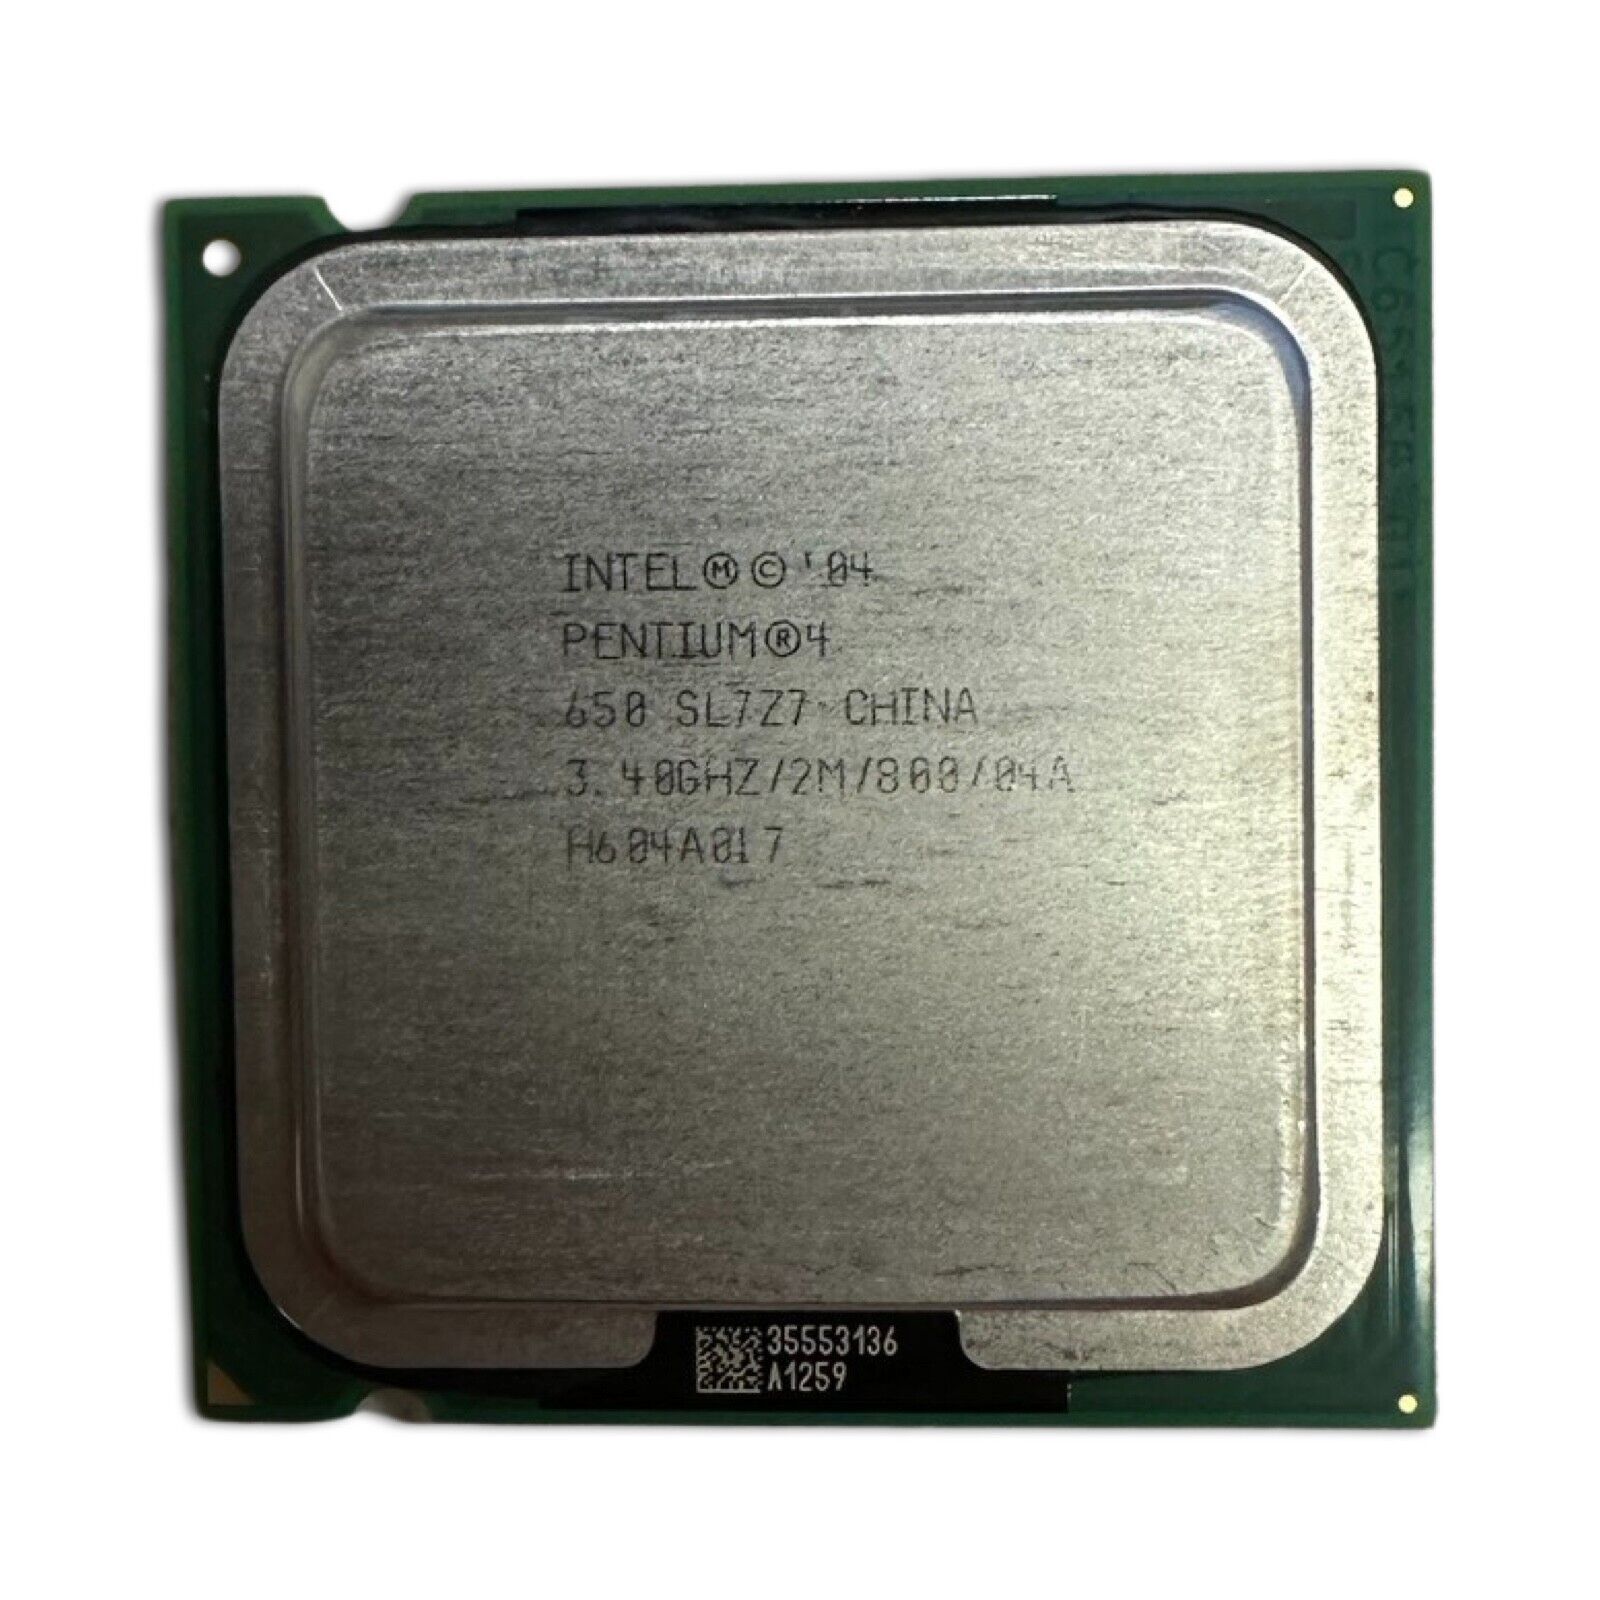 Intel Pentium 4 650 3.4GHz 800MHz 2MB Socket 775 CPU